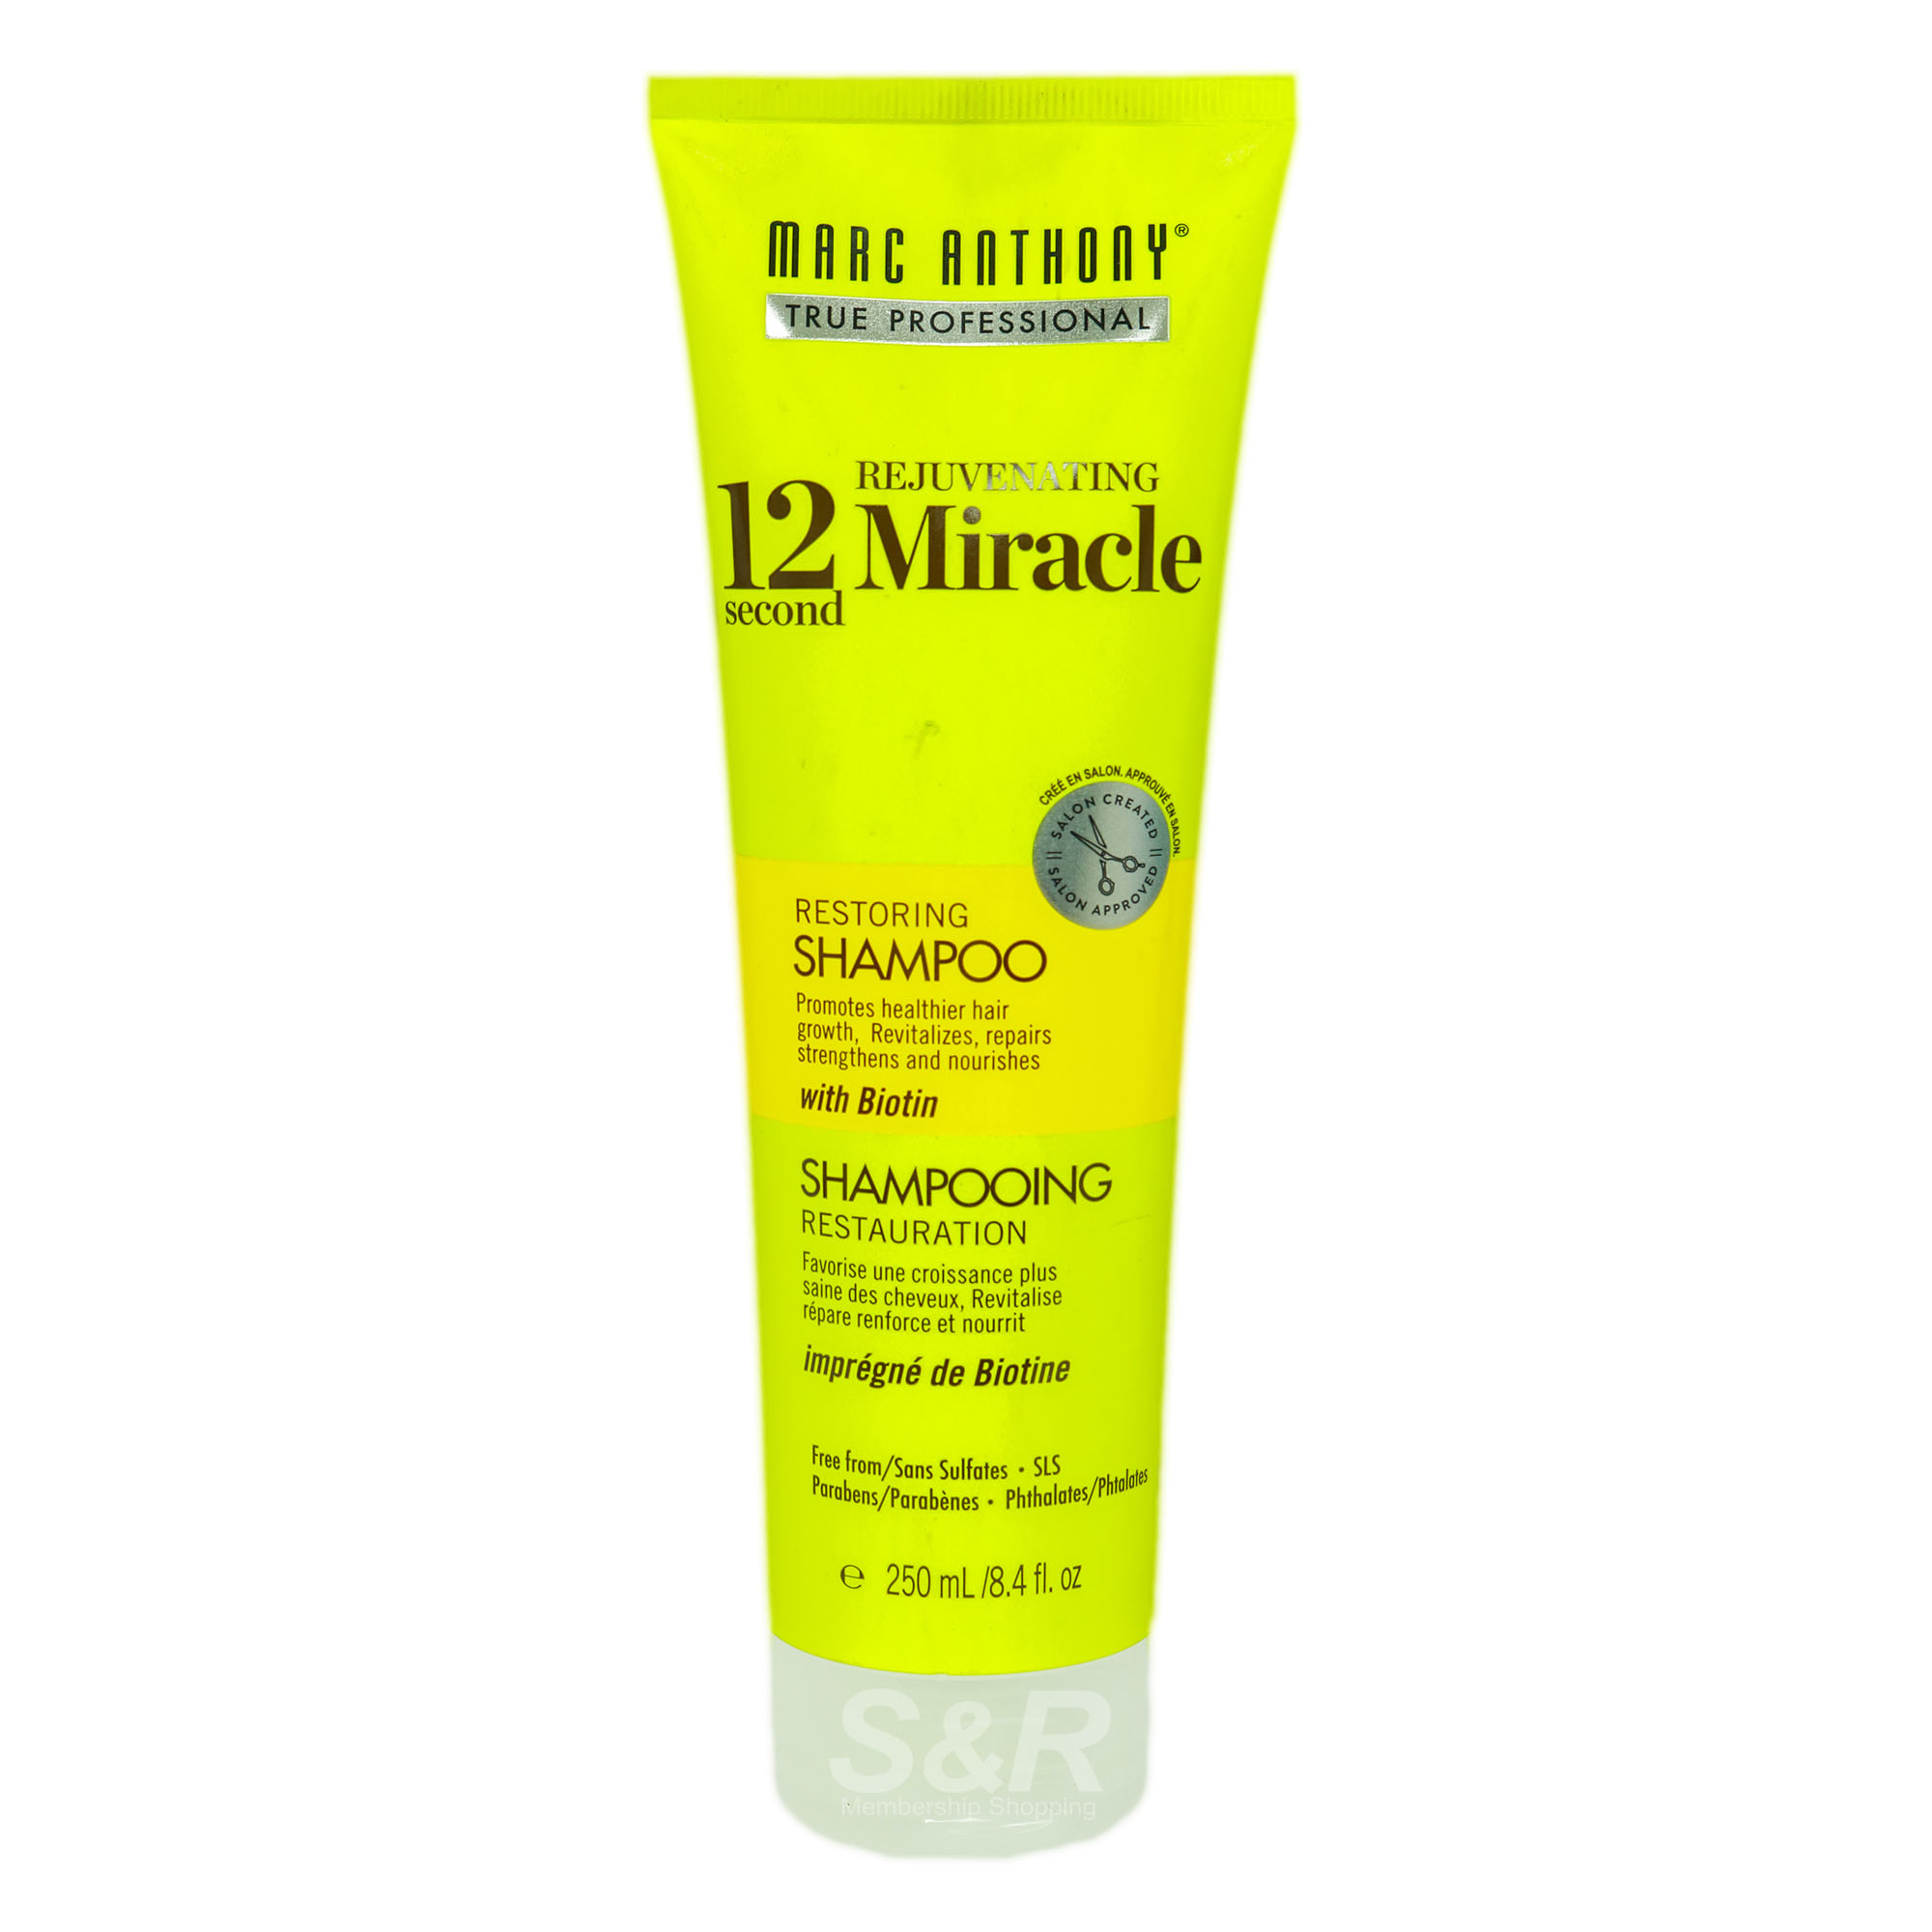 marc anthony rejuvenating 12 second miracle restoring shampoo 250ml